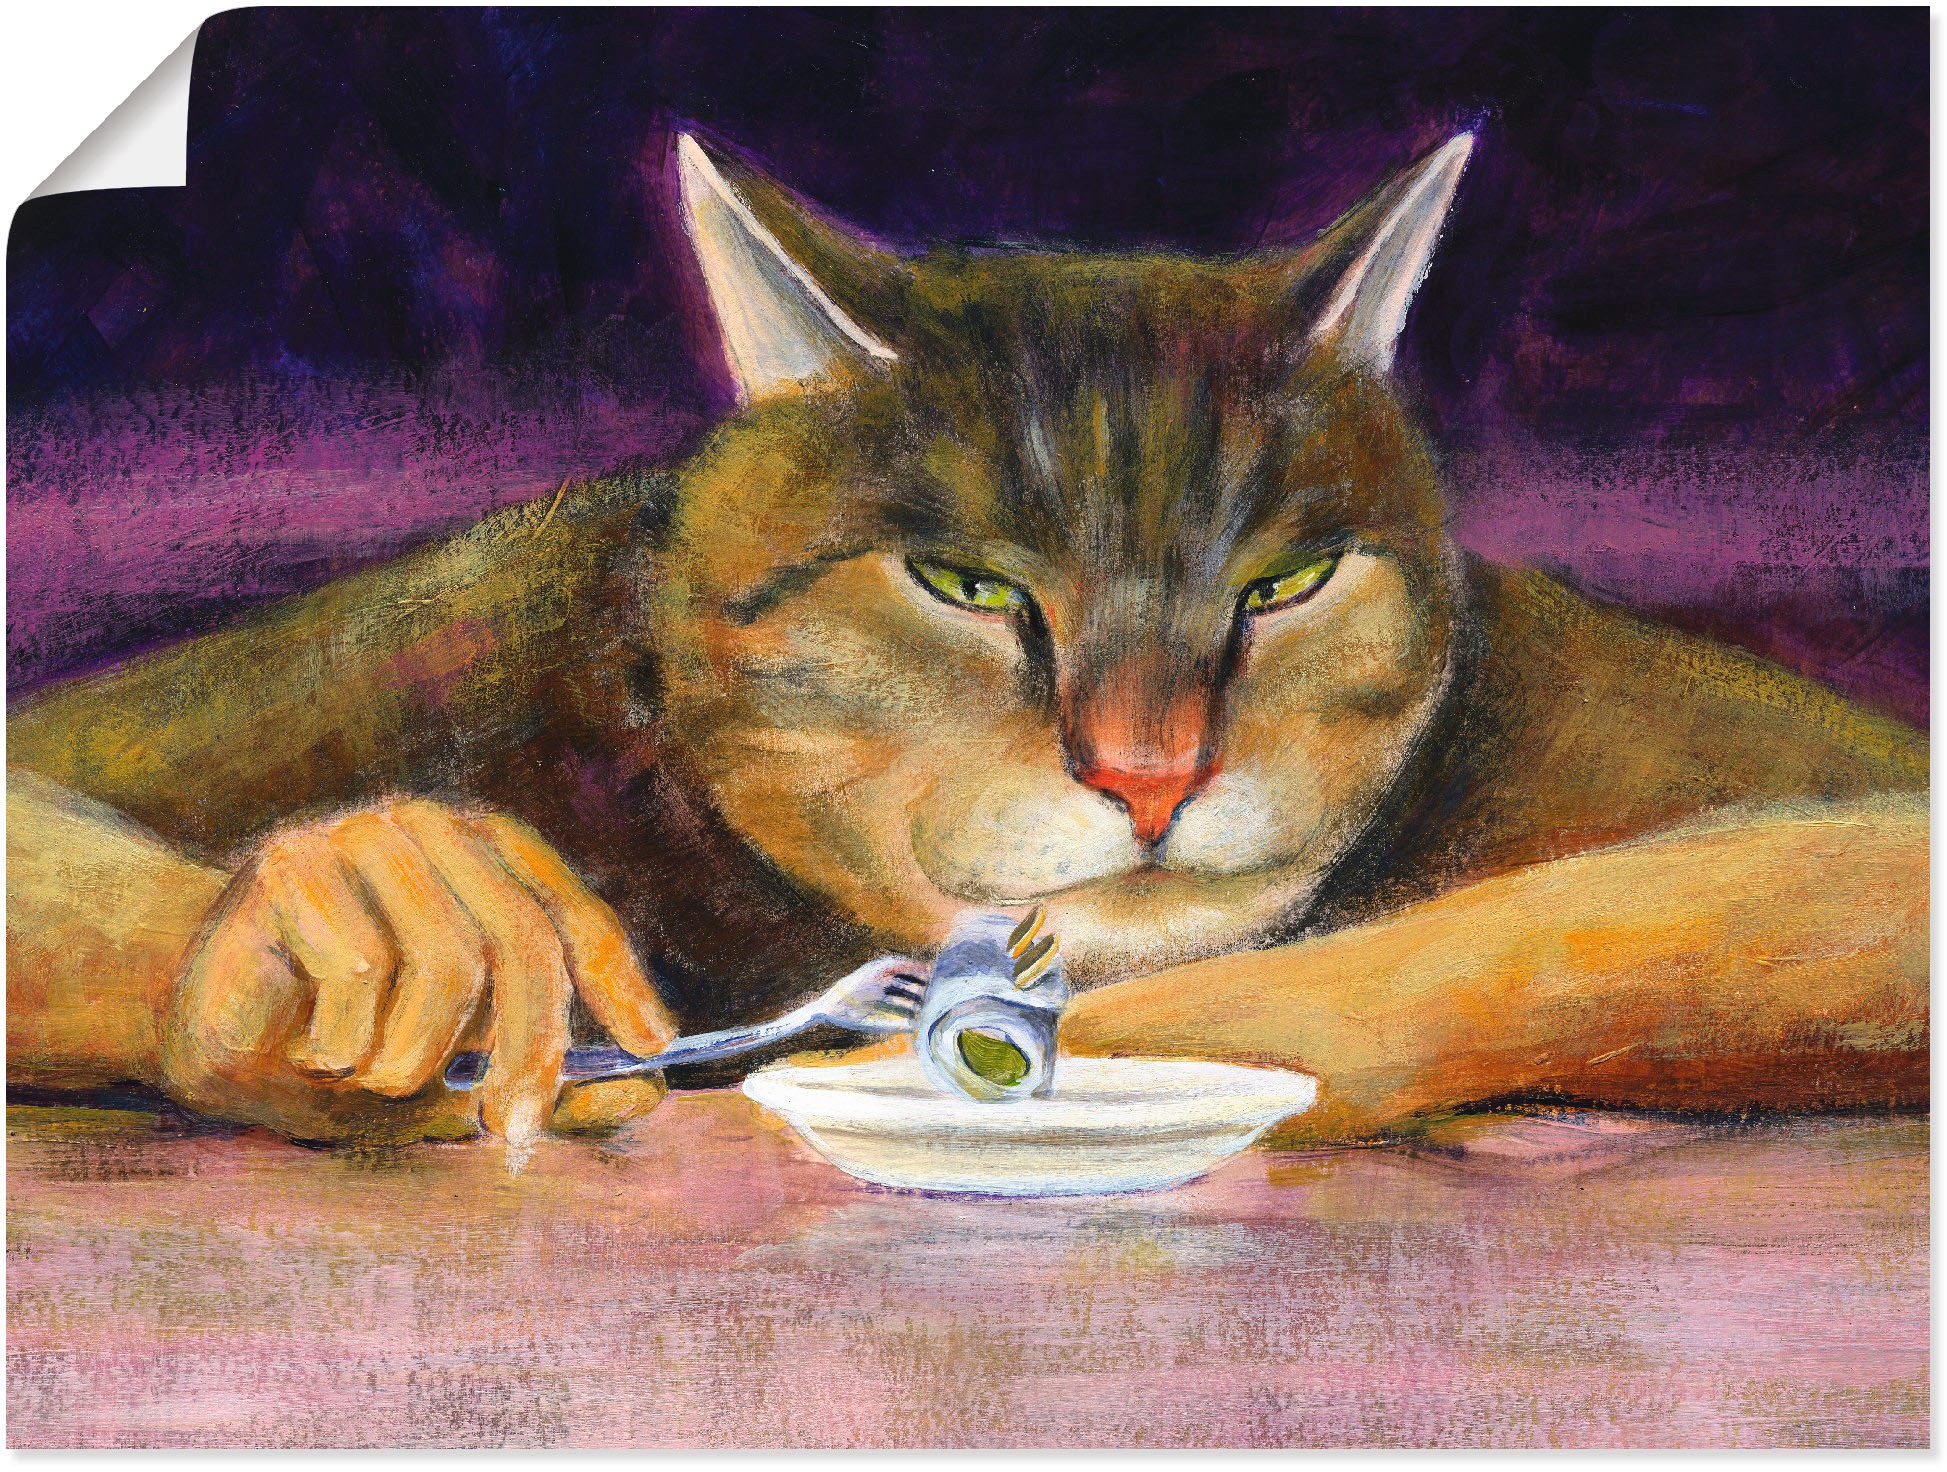 Artland Wandbild »Katzenjammer«, Haustiere, (1 St.), als Leinwandbild, Poster in verschied. Größen